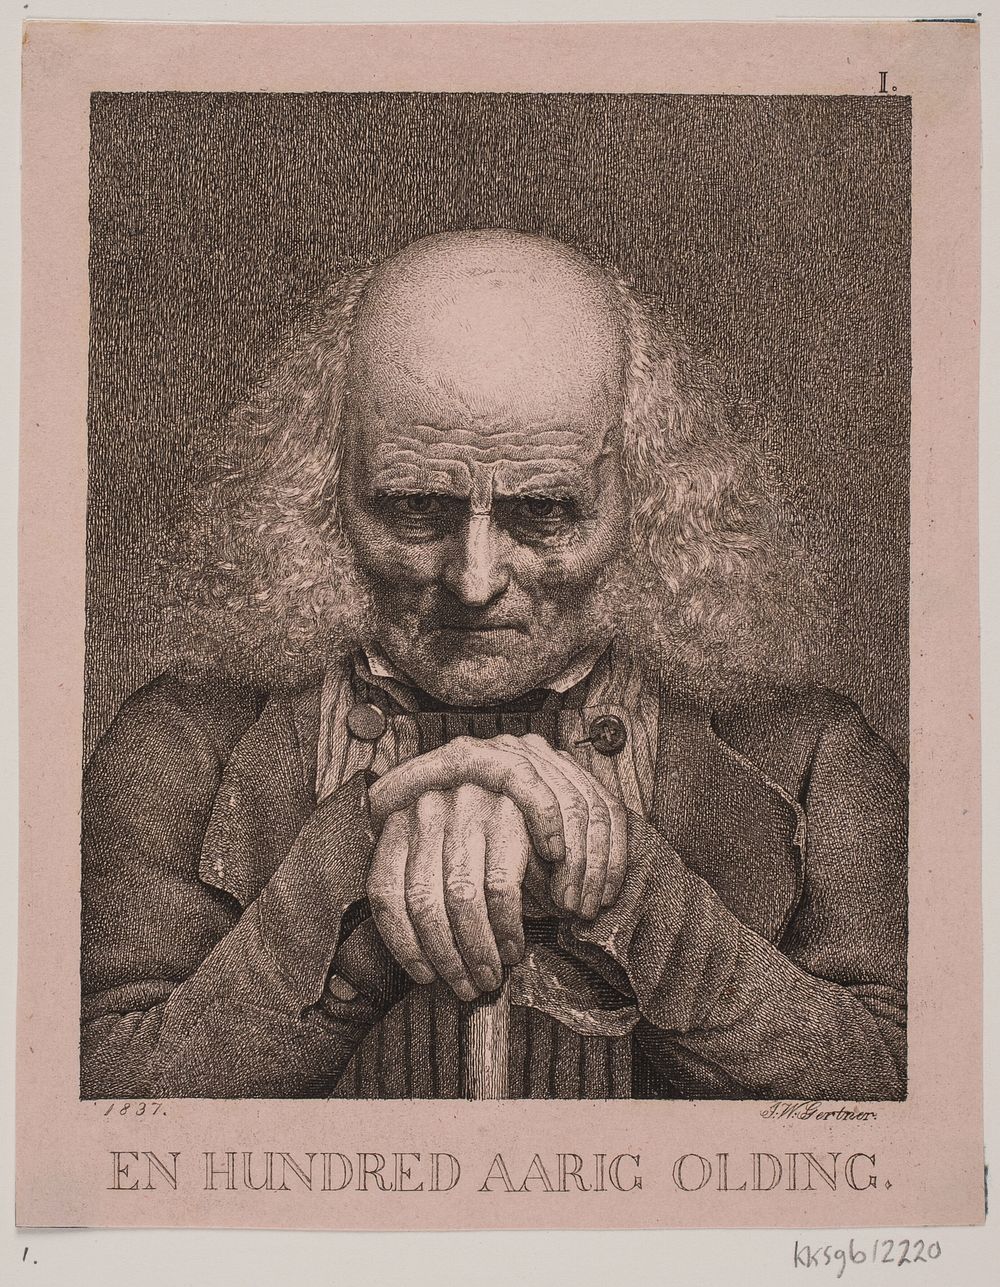 A centenarian old man by J. V. Gertner